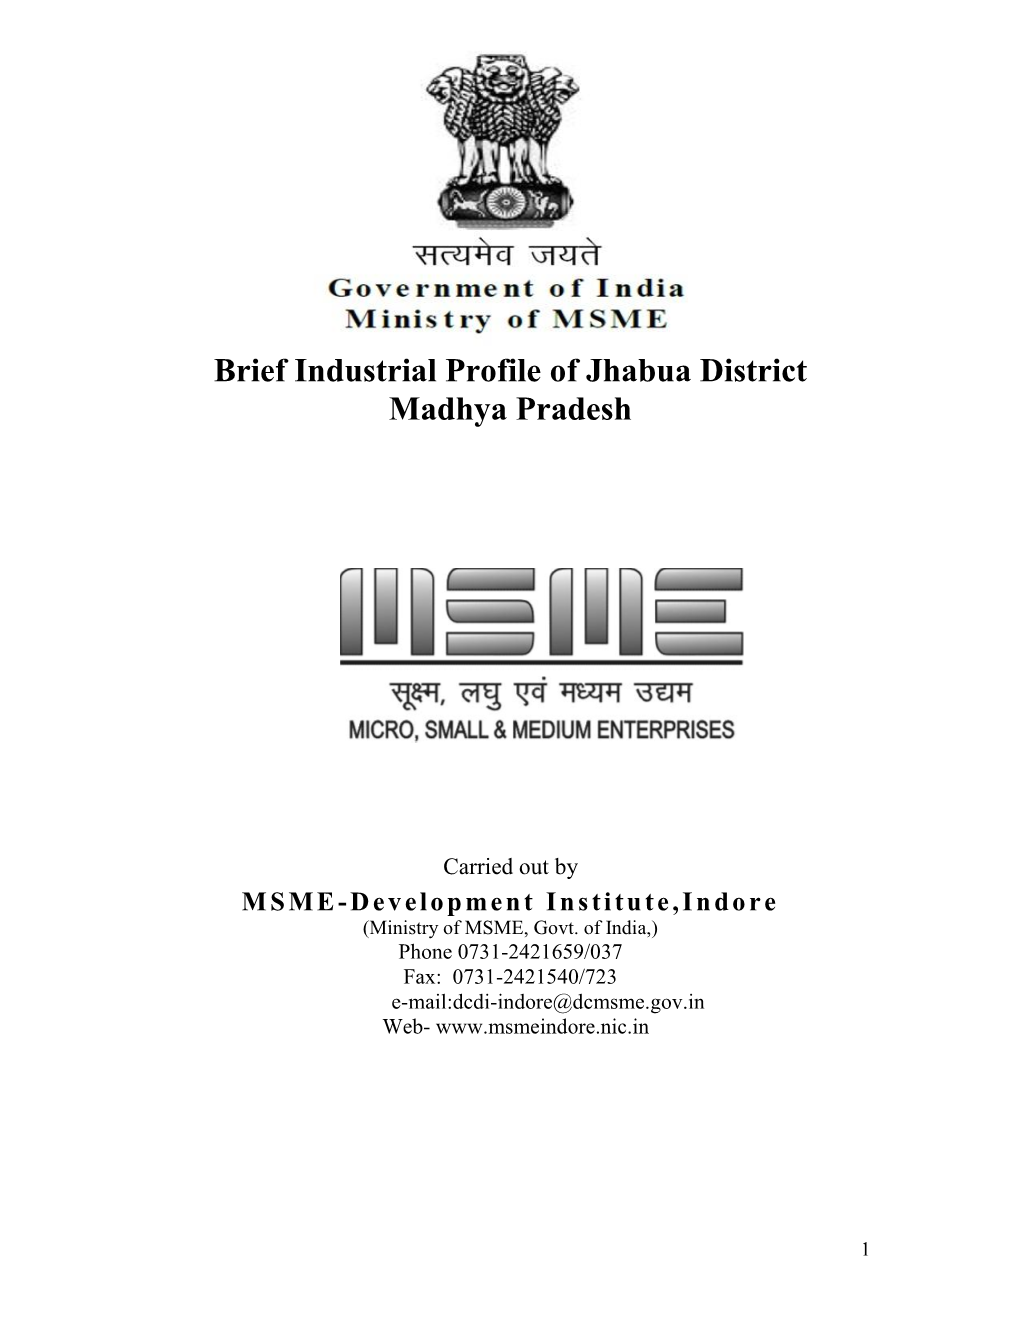 Brief Industrial Profile of Jhabua District Madhya Pradesh